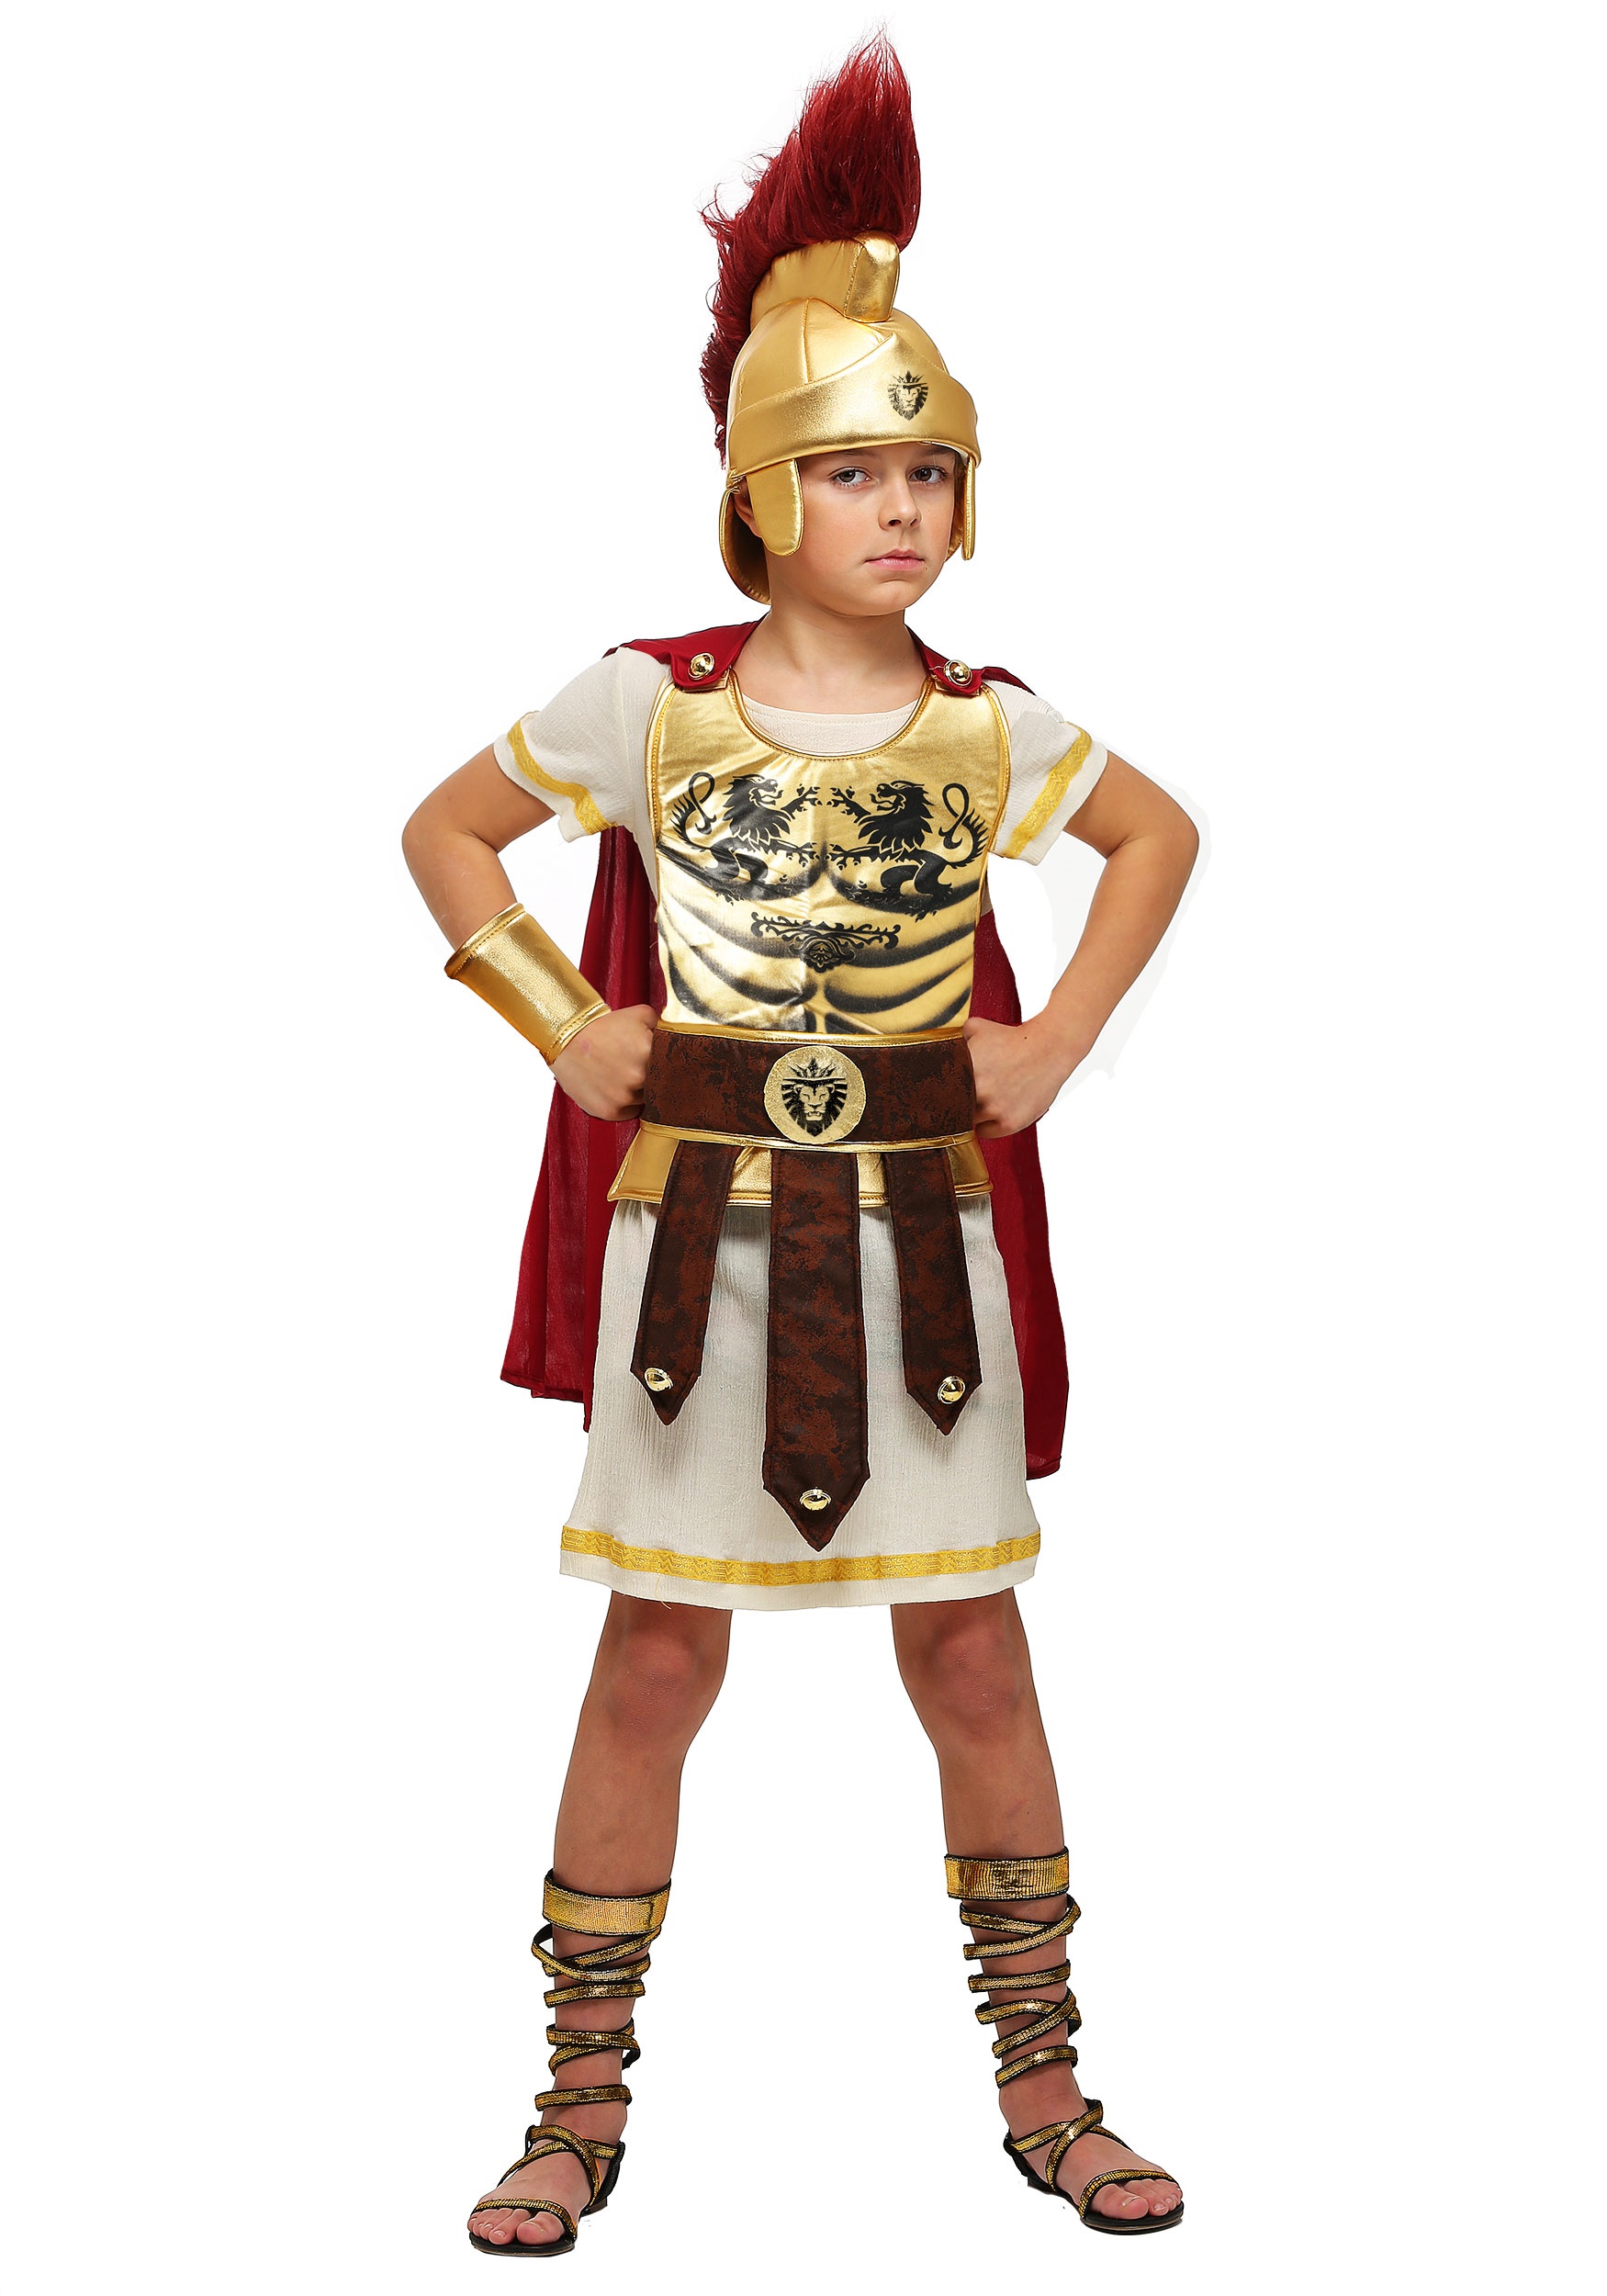 Gladiator Champion Costume for Boys. 